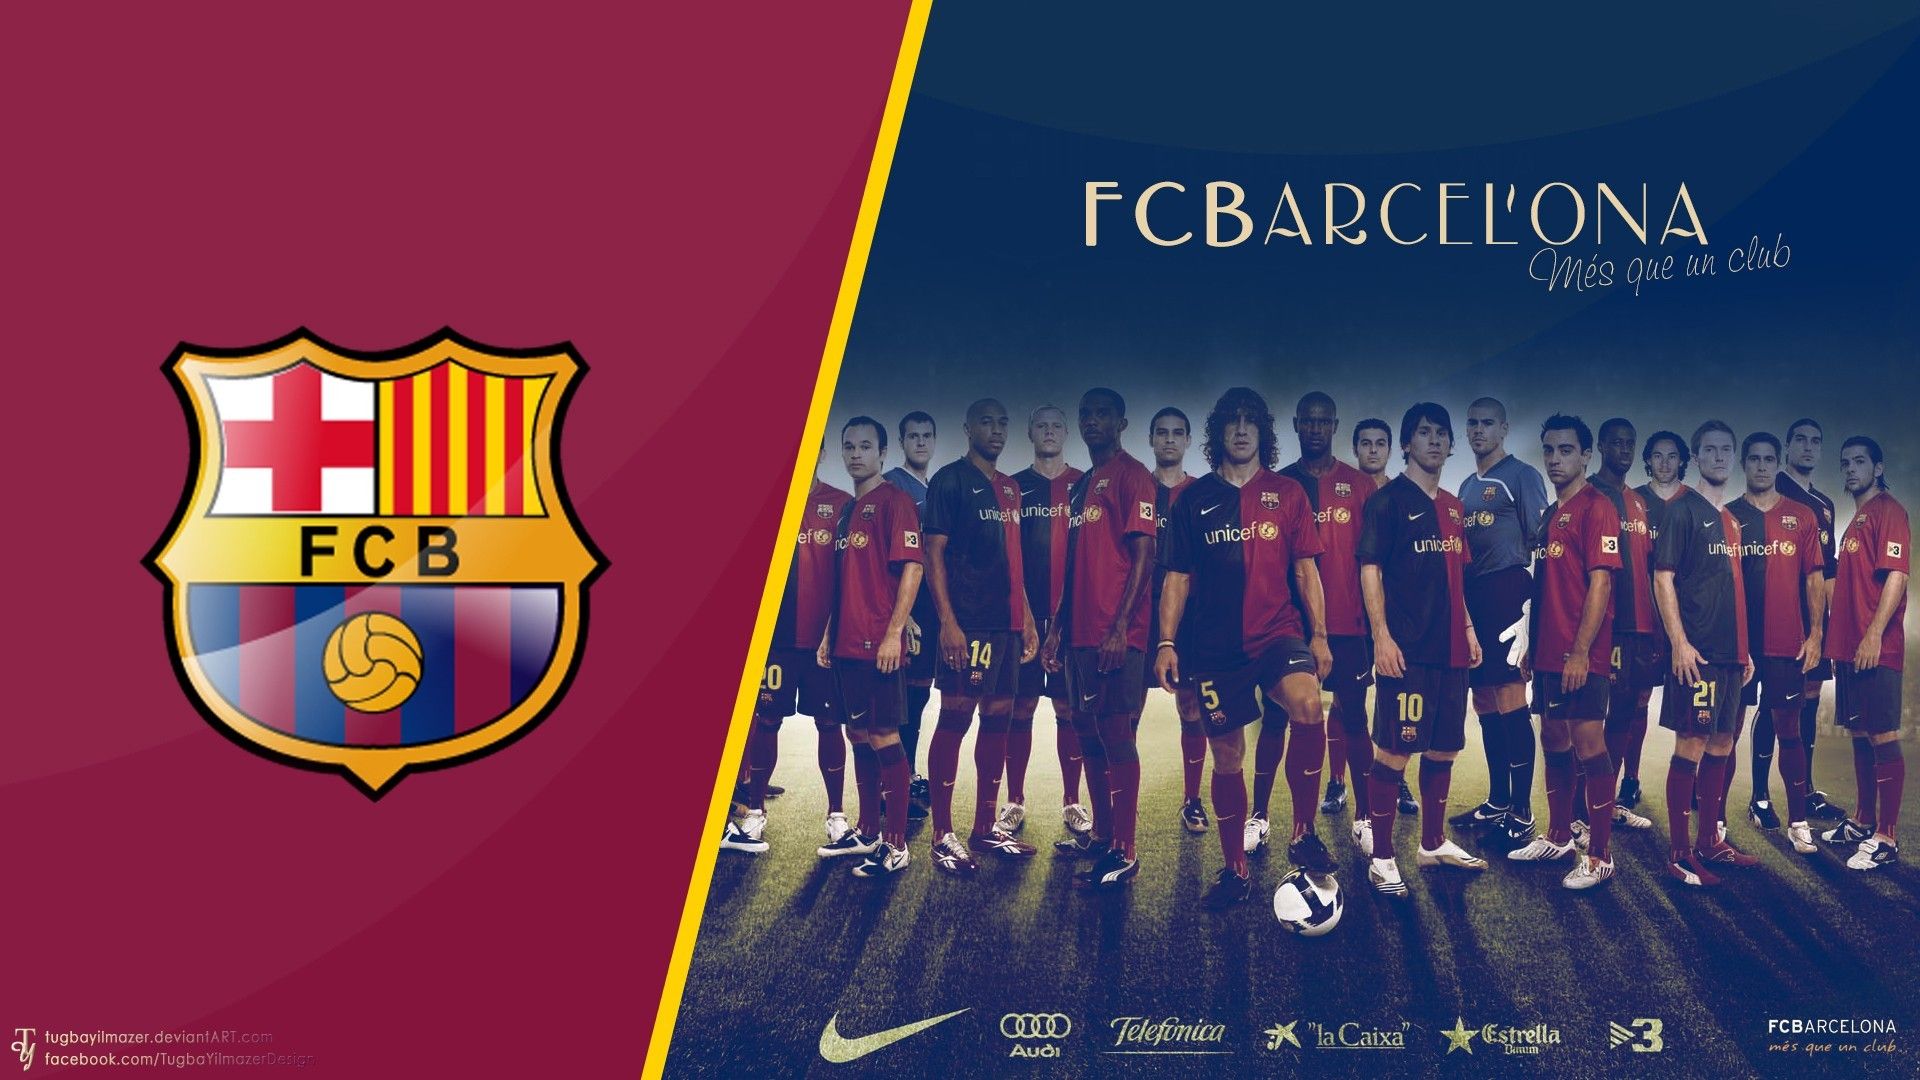 FC-Barcelona Gold, barcelona, black, fc, fc barcelona, football, golden,  logo, HD phone wallpaper | Peakpx